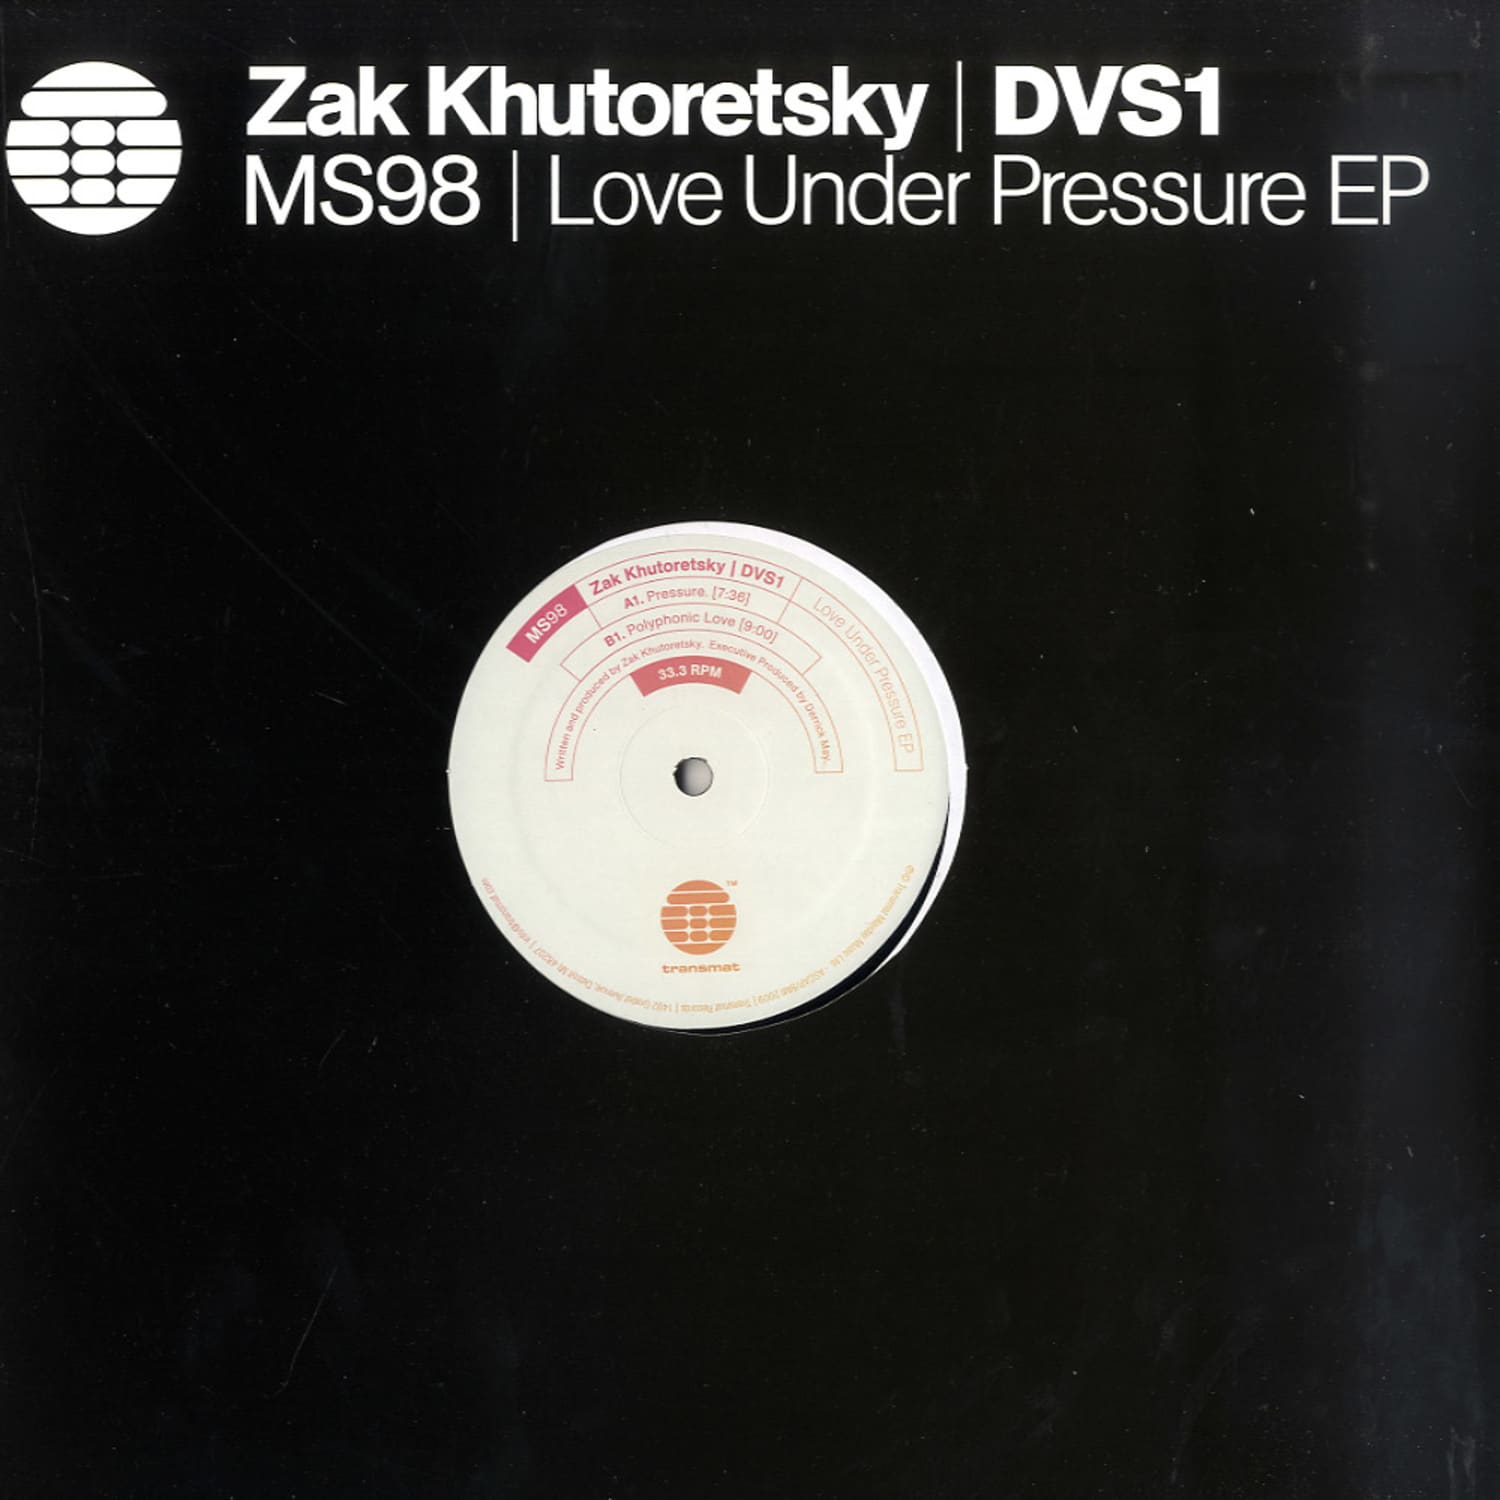 Zak Khutoretsky / DVS1 - LOVE UNDER PRESSURE EP